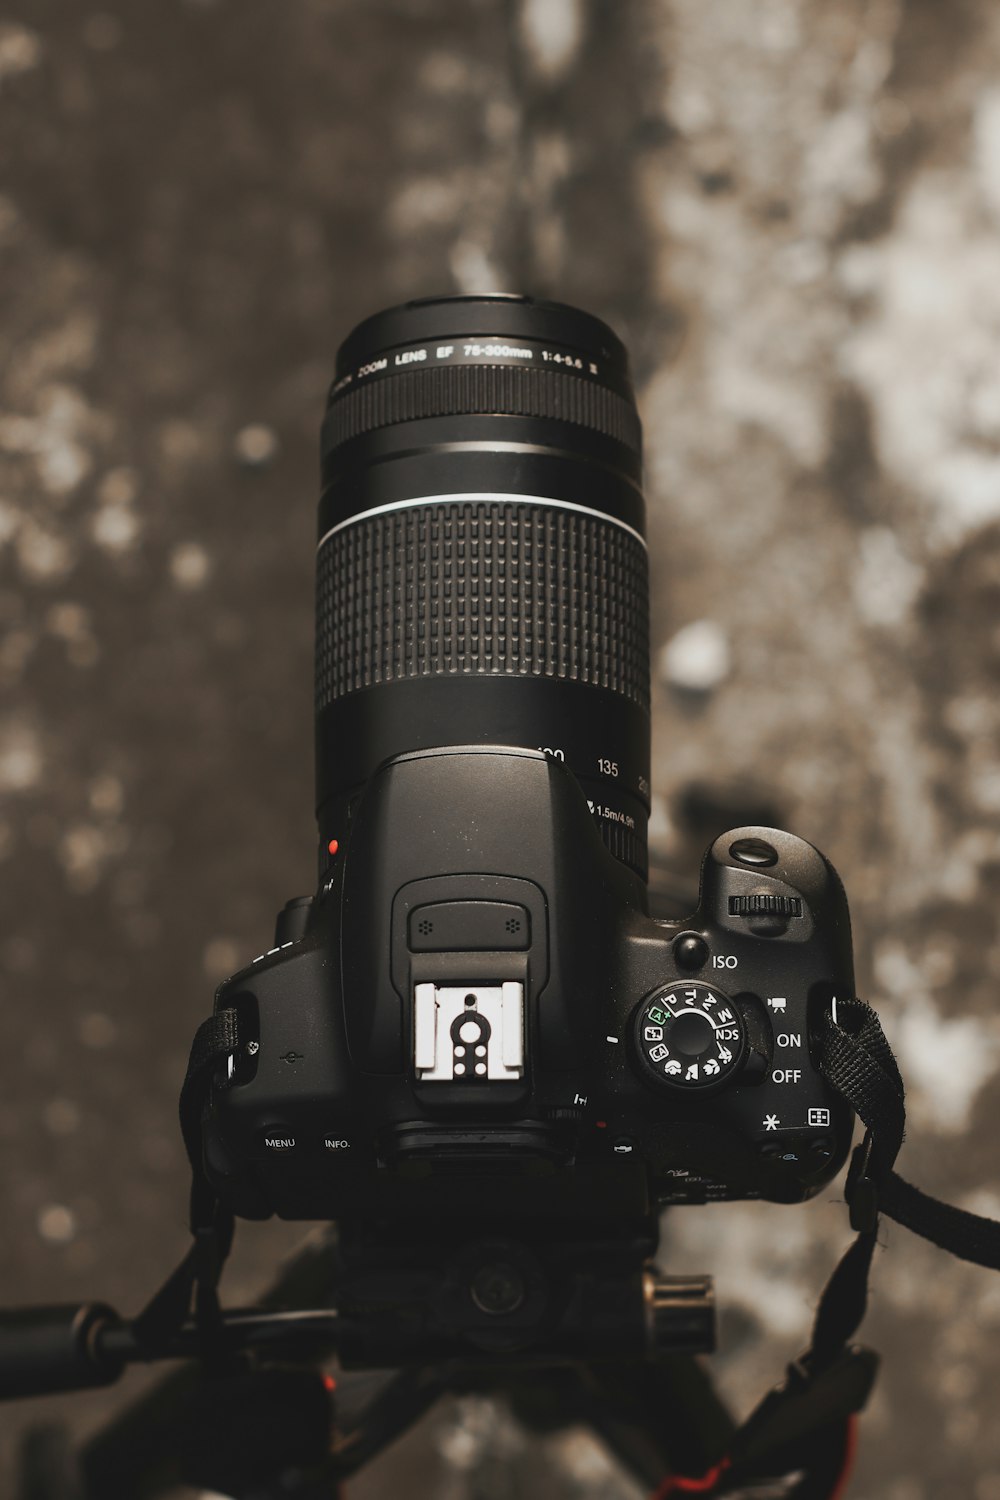 Fotocamera reflex digitale Nikon nera su superficie marrone